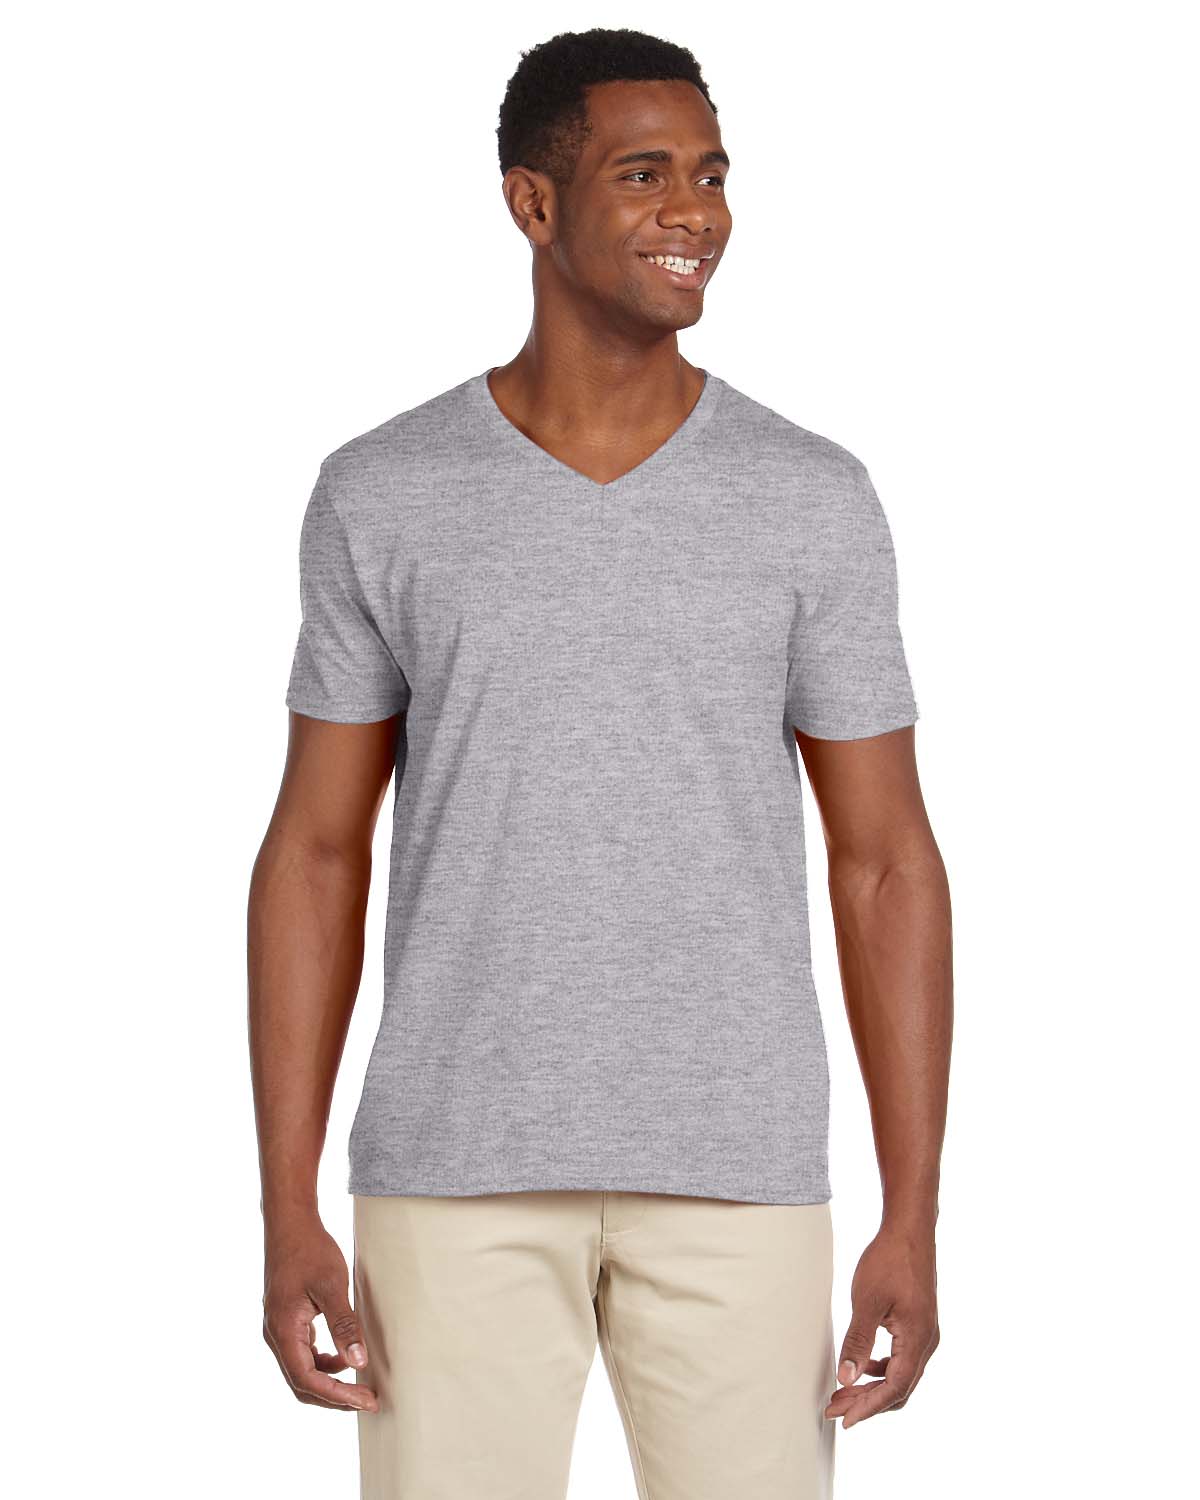 NEW Gildan Men's 4.5 oz SoftStyle V-Neck T-Shirt Short Sleeve Tee MG64V ...